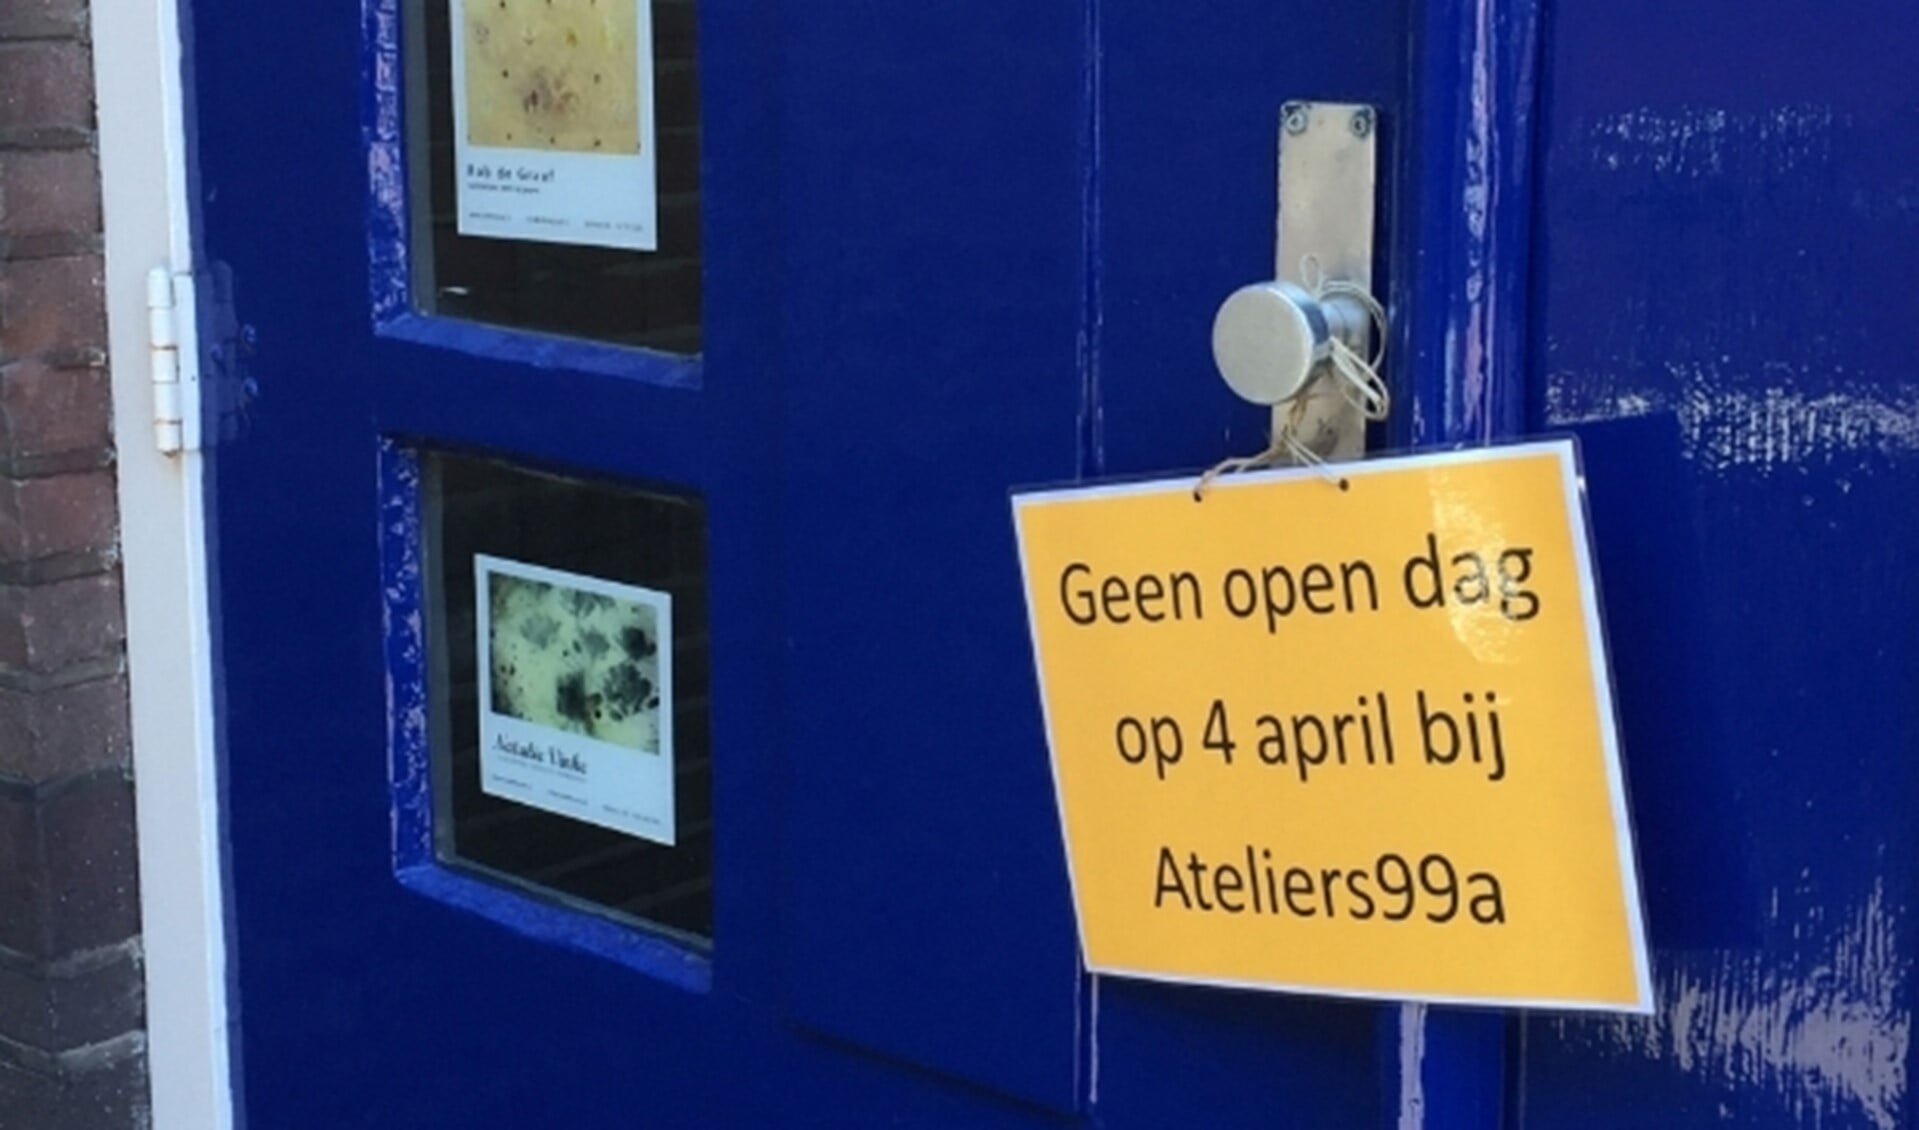 gesloten deur Ateliers99a in de Dorpsstraat met mededeling